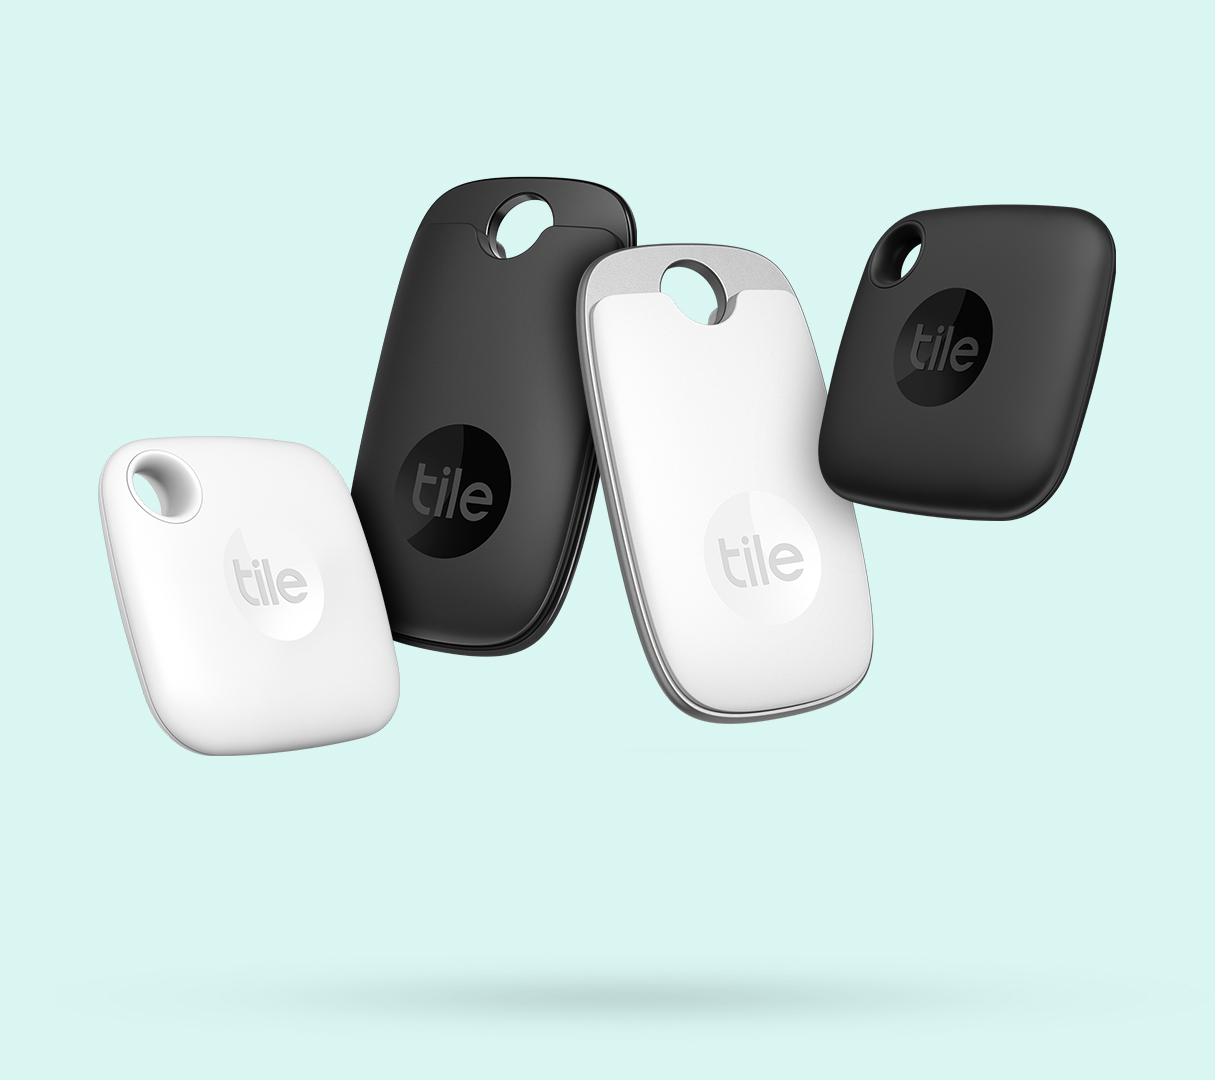 Tile Pro 2-Pack (Black/White). Powerful Bluetooth Tracker, Keys